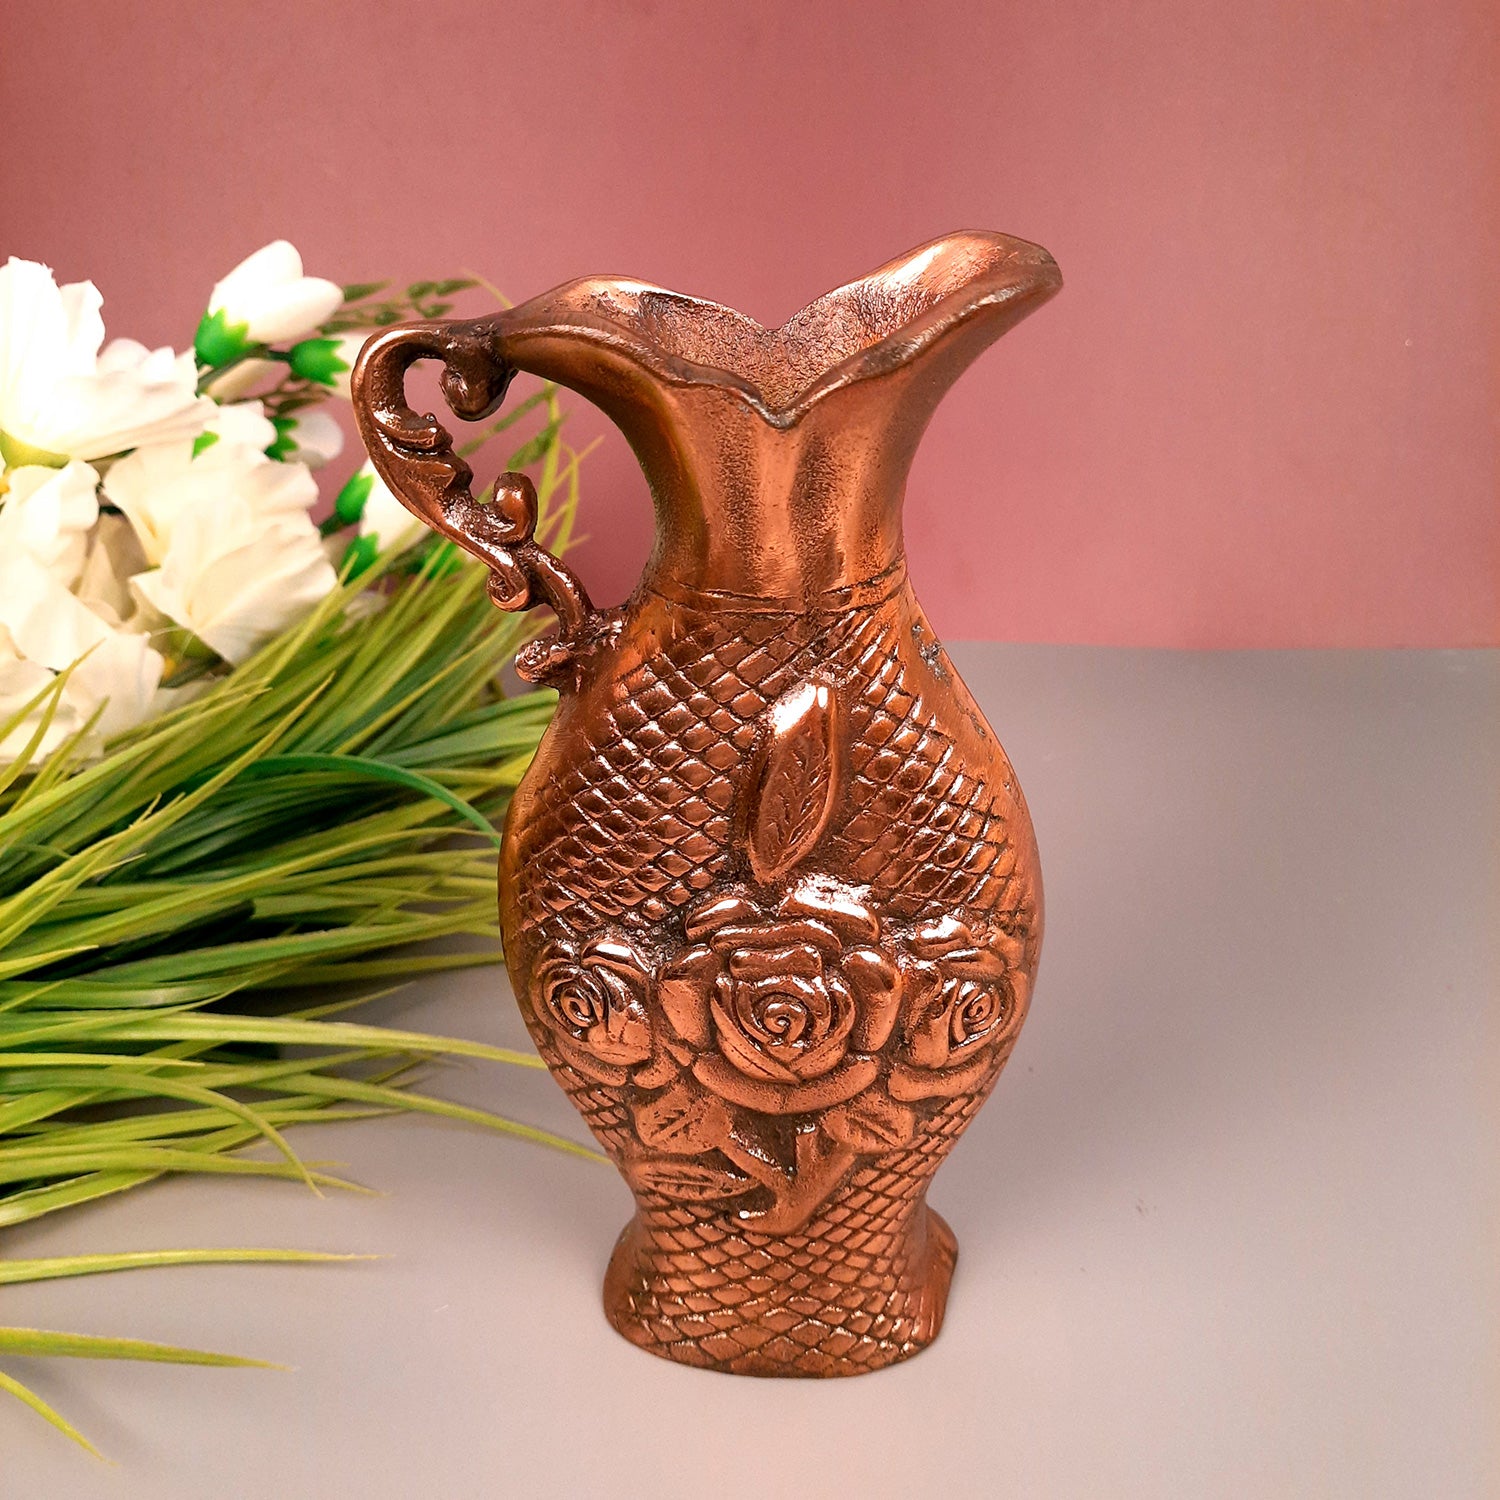 Flower Vase | Pots for Flowers - Metal - For Tabletop, Living Room, Home & Office Decoration | Centerpiece for Table Decoration |Vases for Gifts - 10 Inch